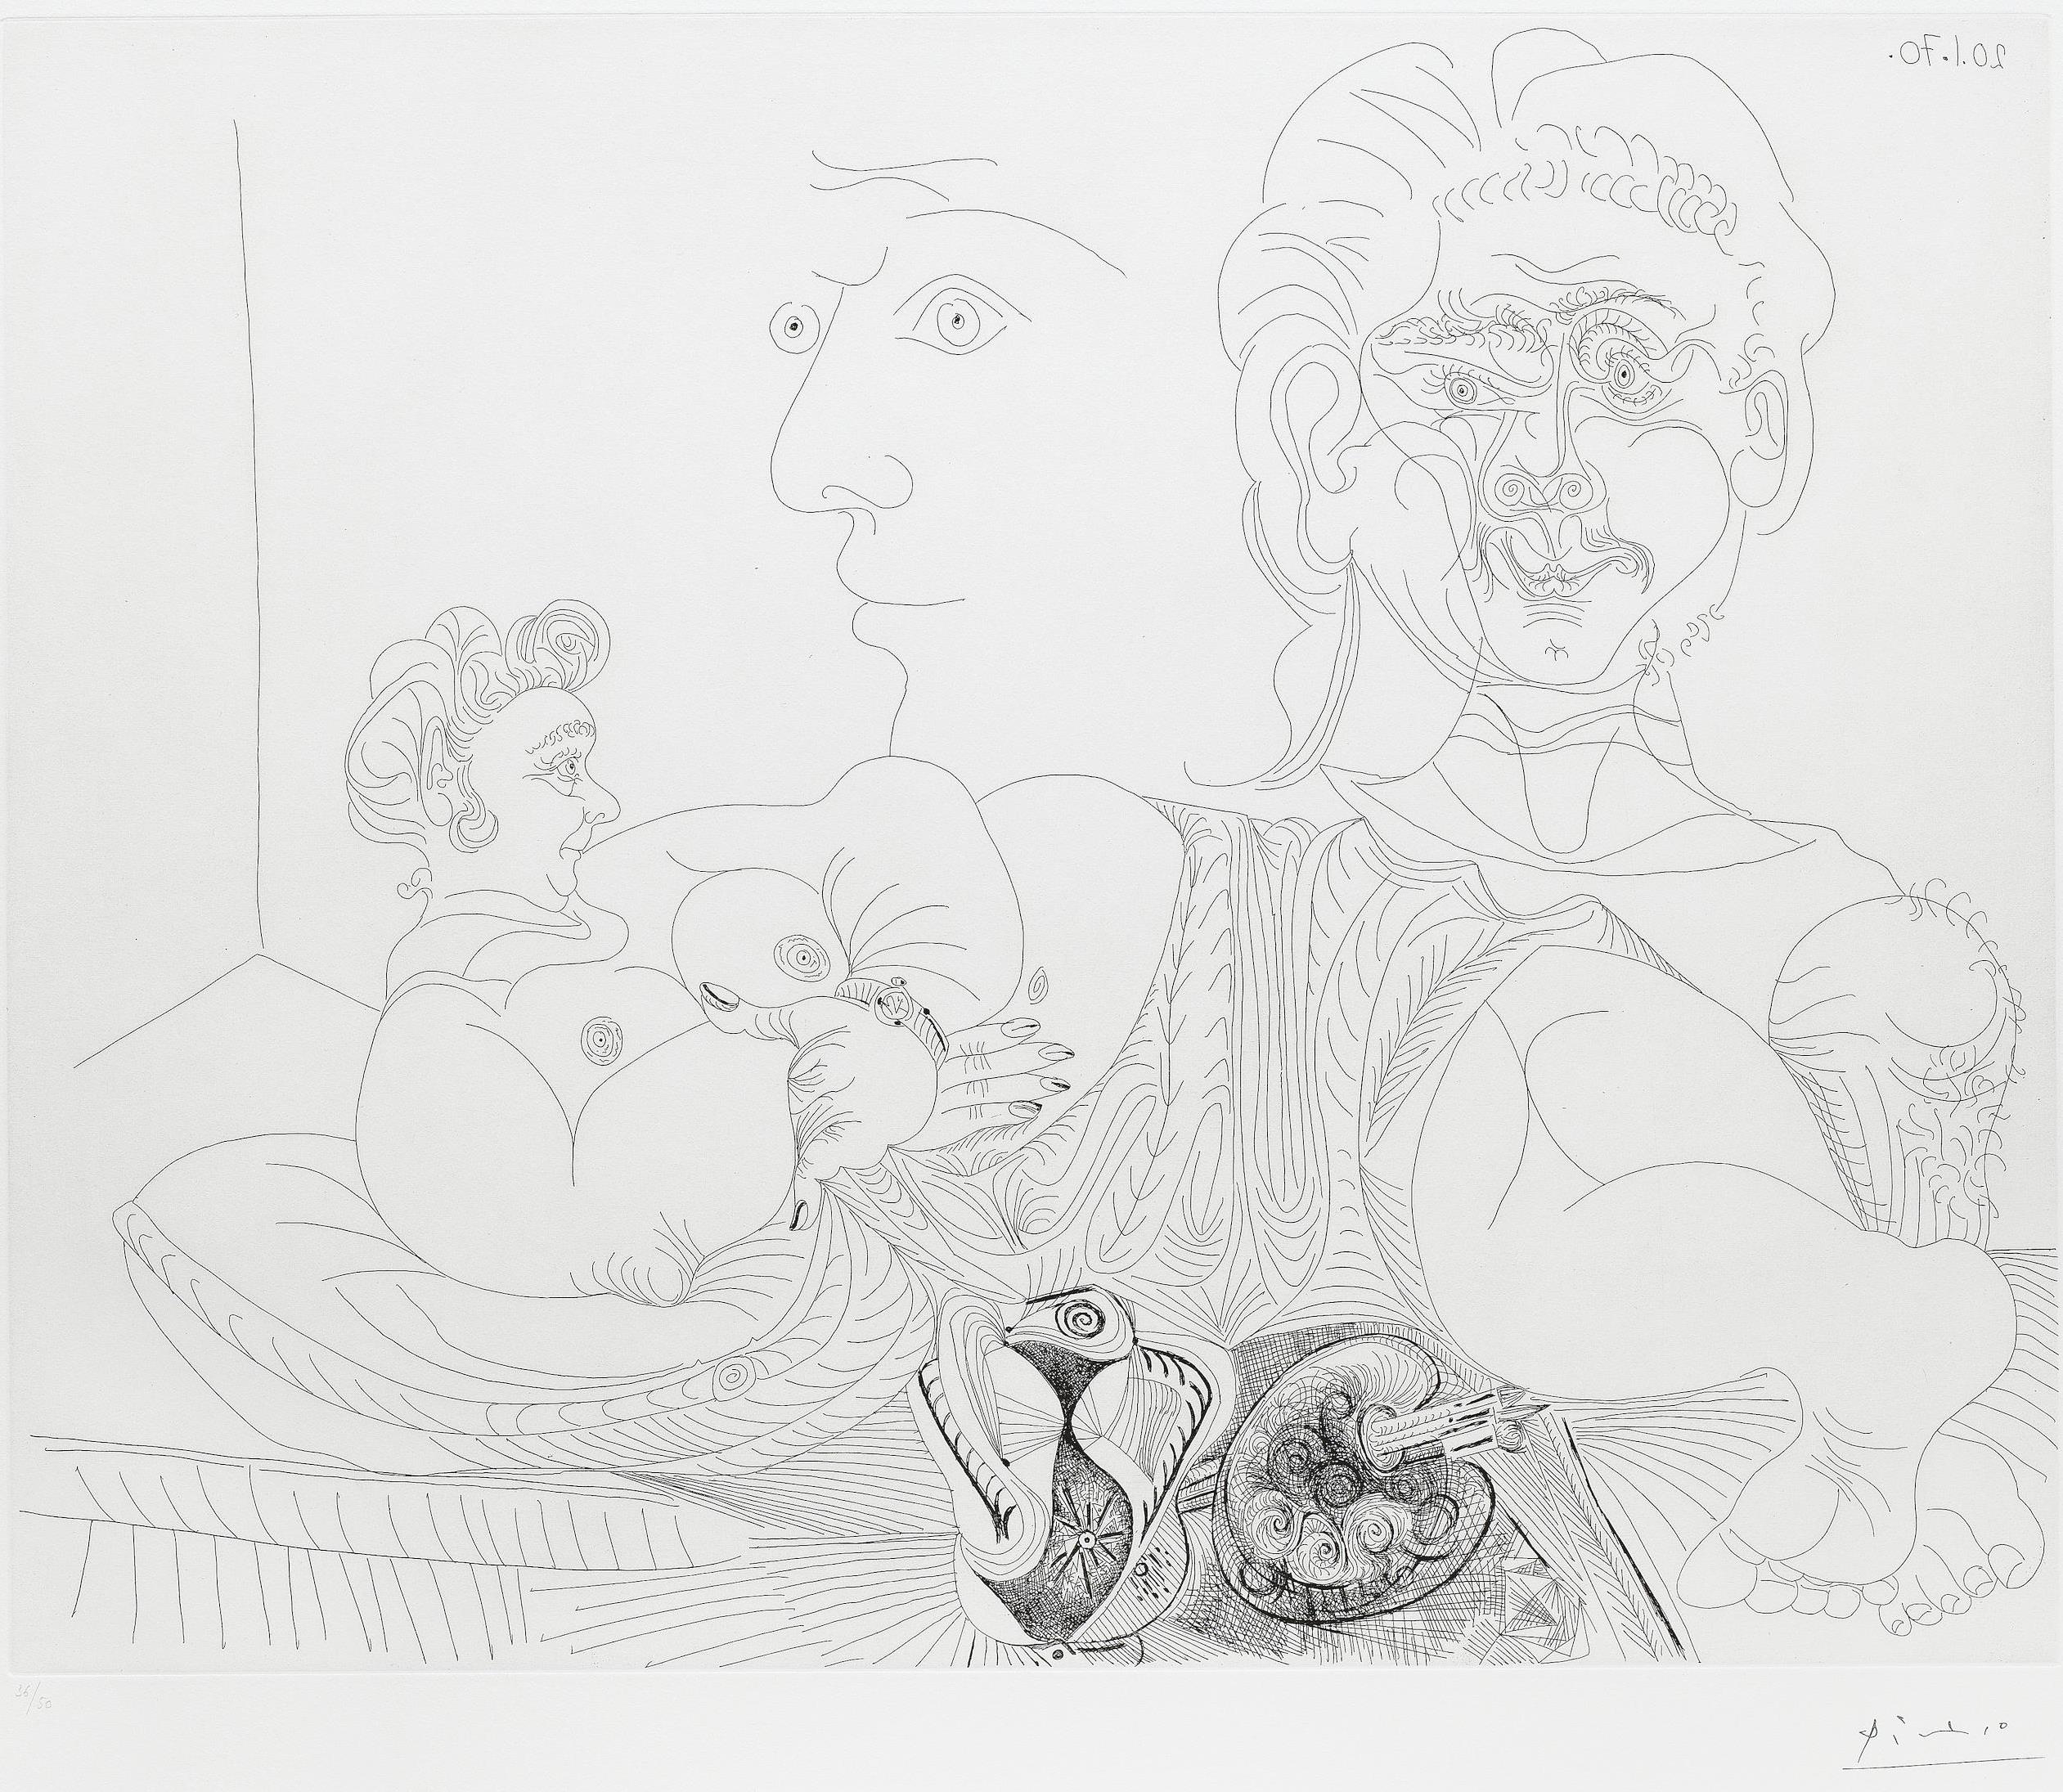 Pablo Picasso, Femme couchée et deux visages, 1970, etching, 18, x 23,3 in, from the Suite 156
